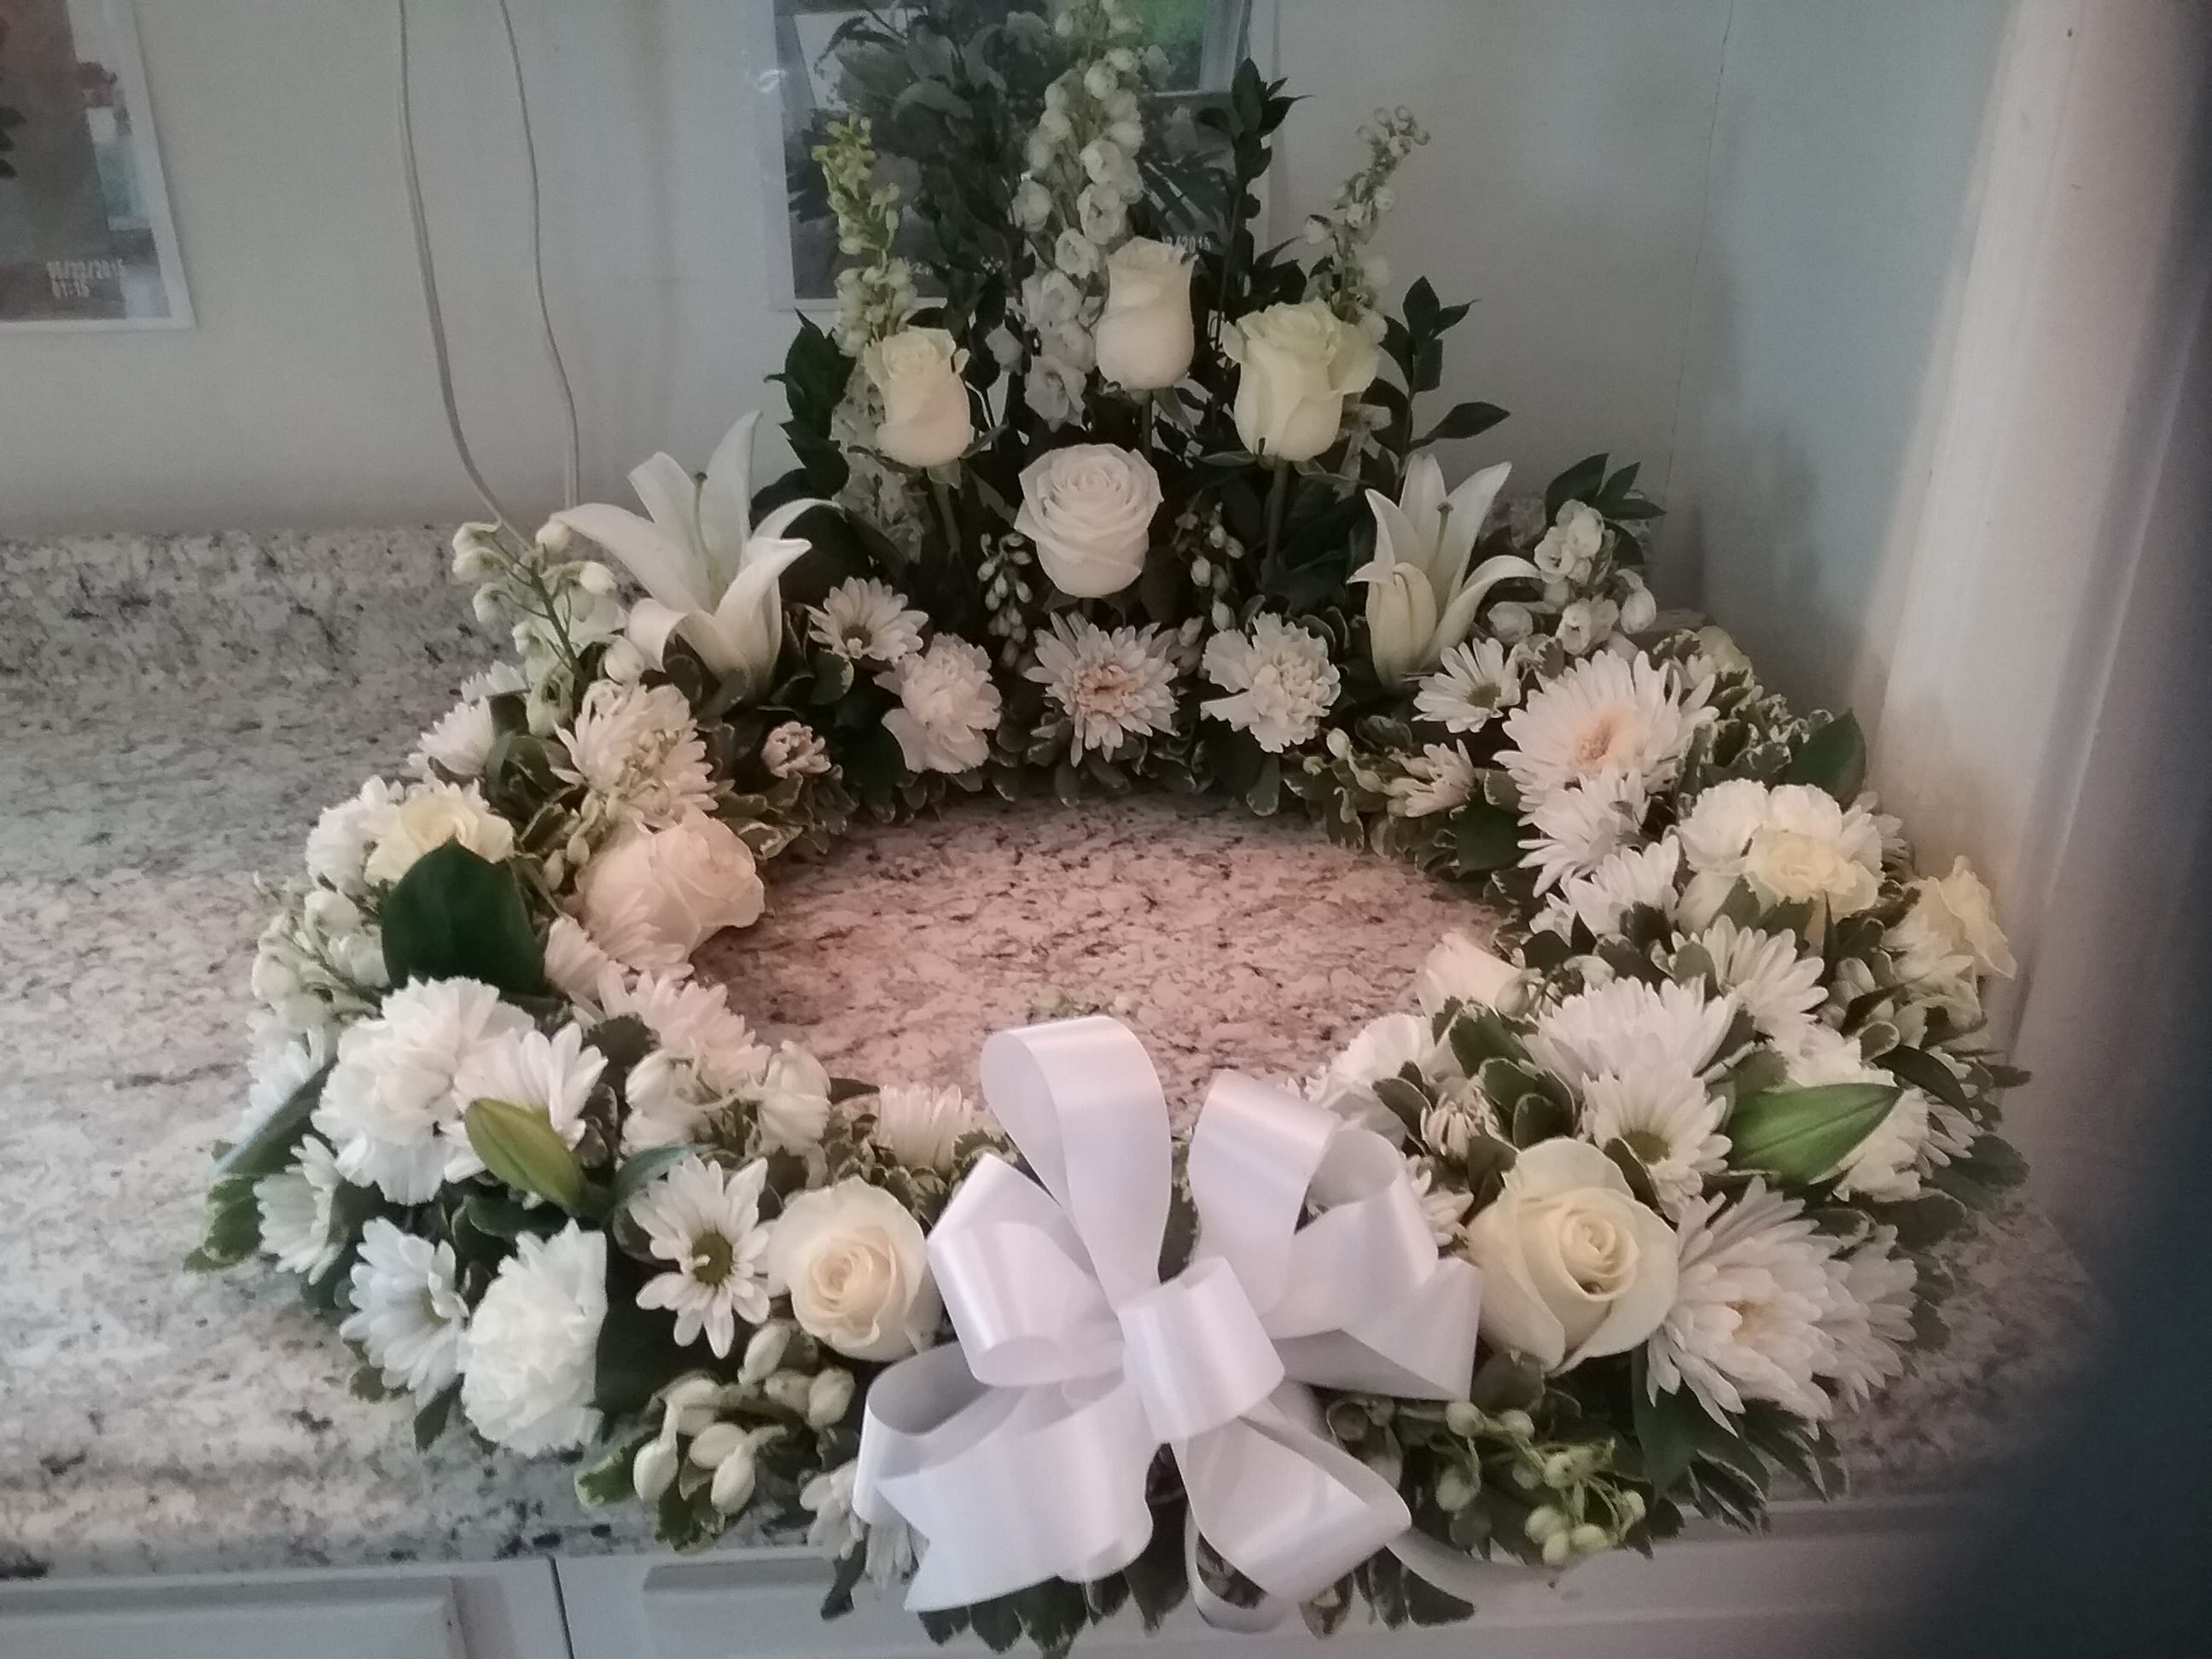 Purity Ring Wreath, Funeral Flowers - Cabramatta florist shop, South west  Sydney, NSW